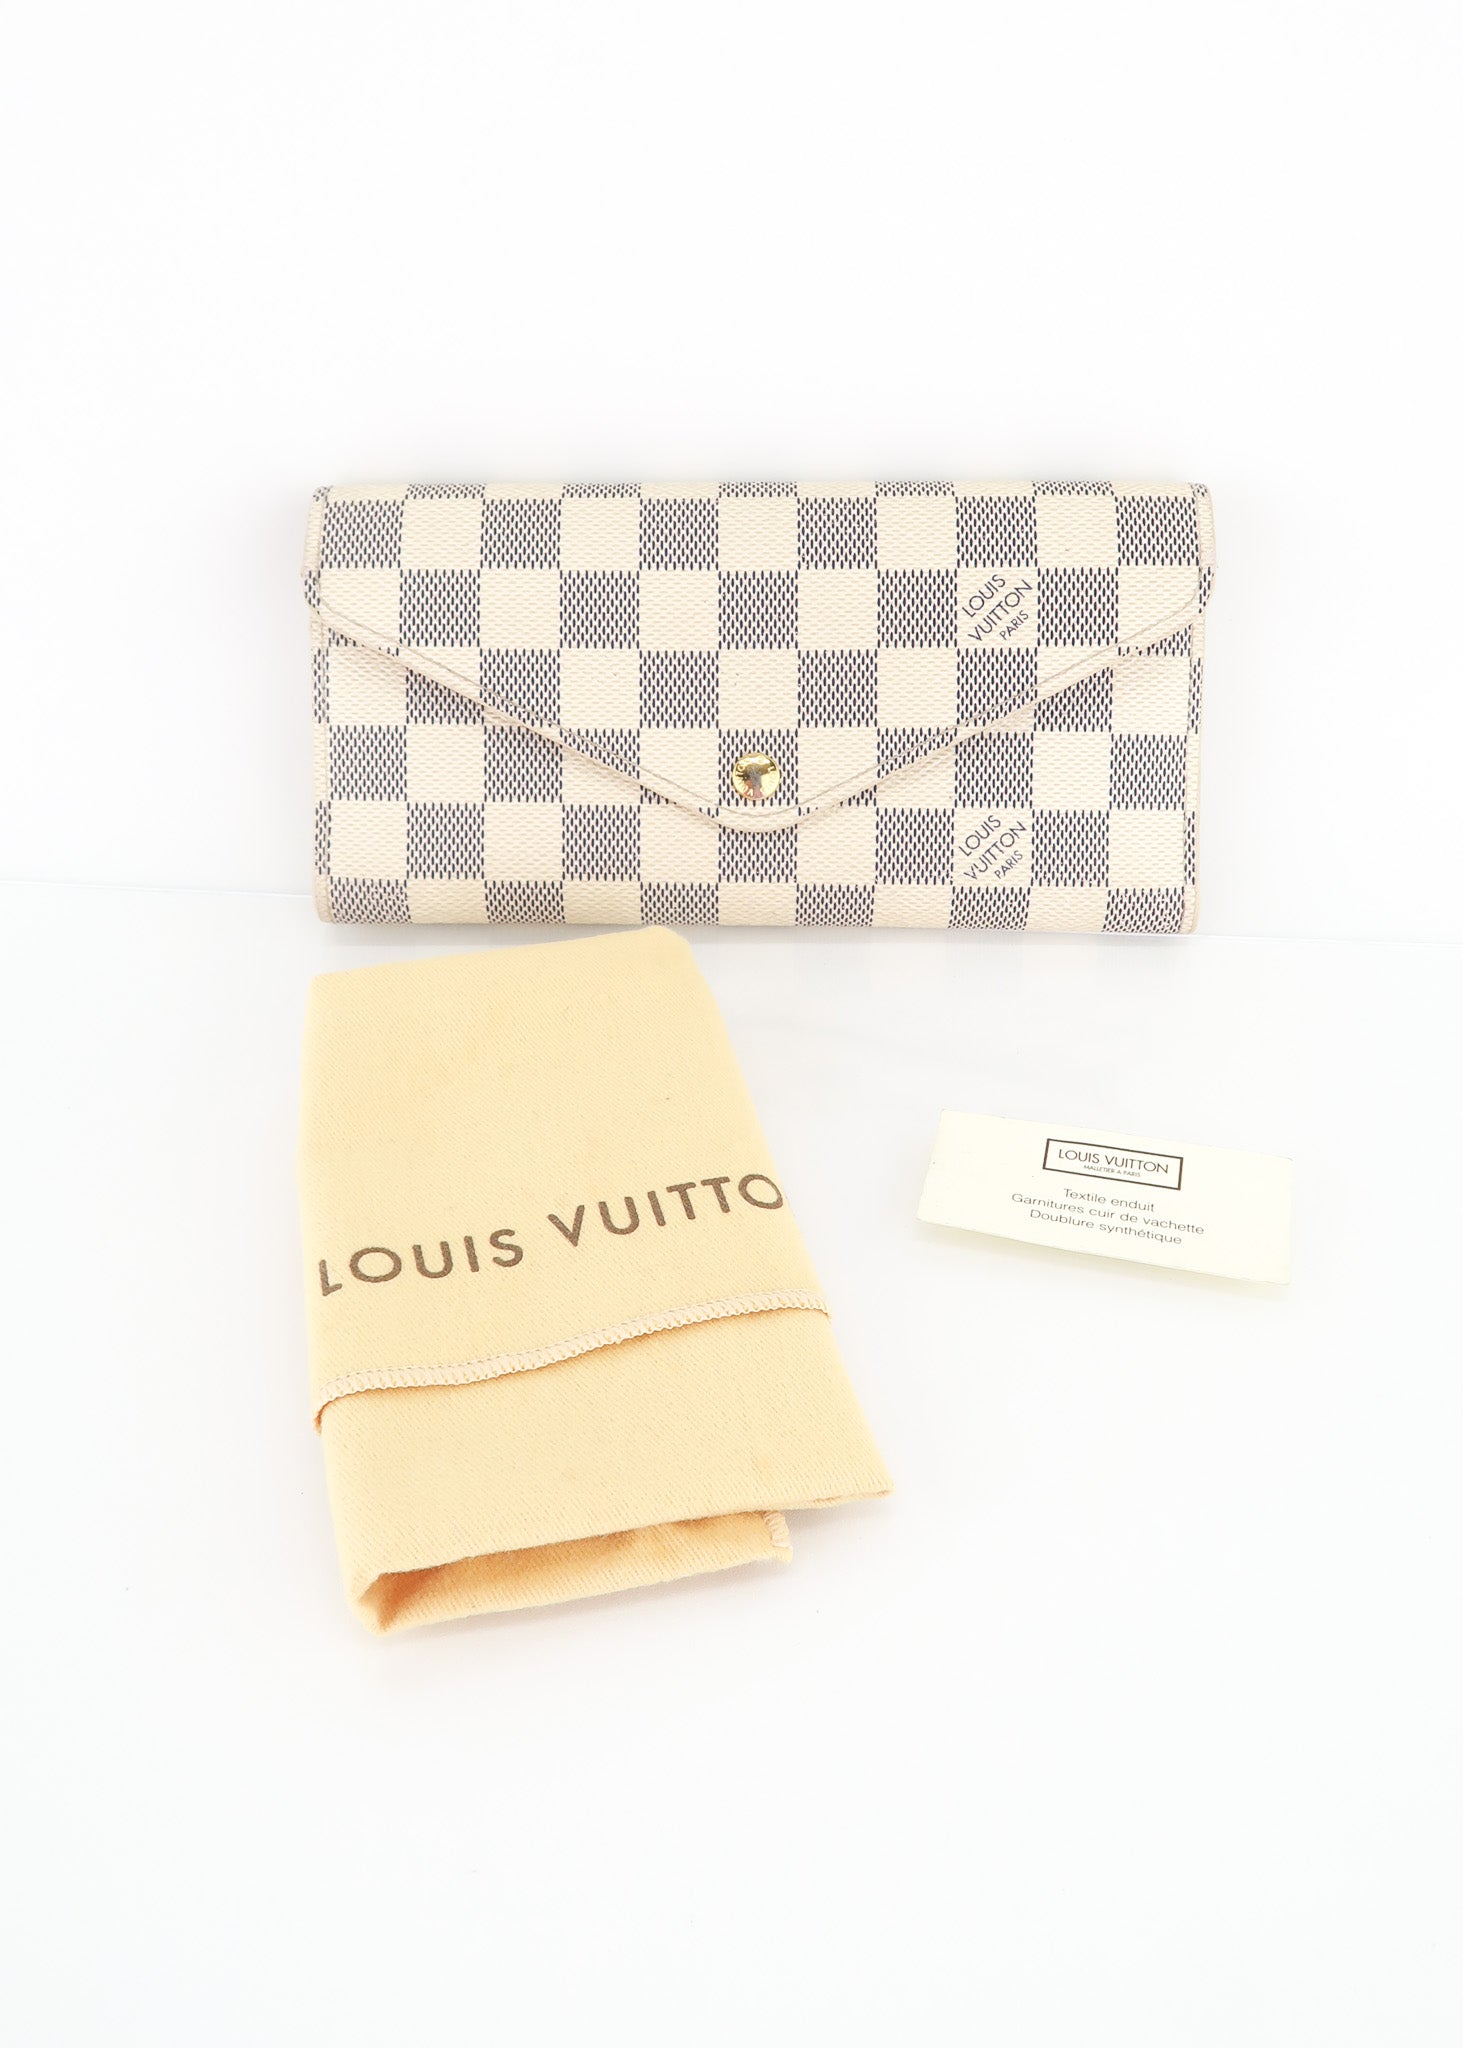 Louis Vuitton's Josephine Wallet